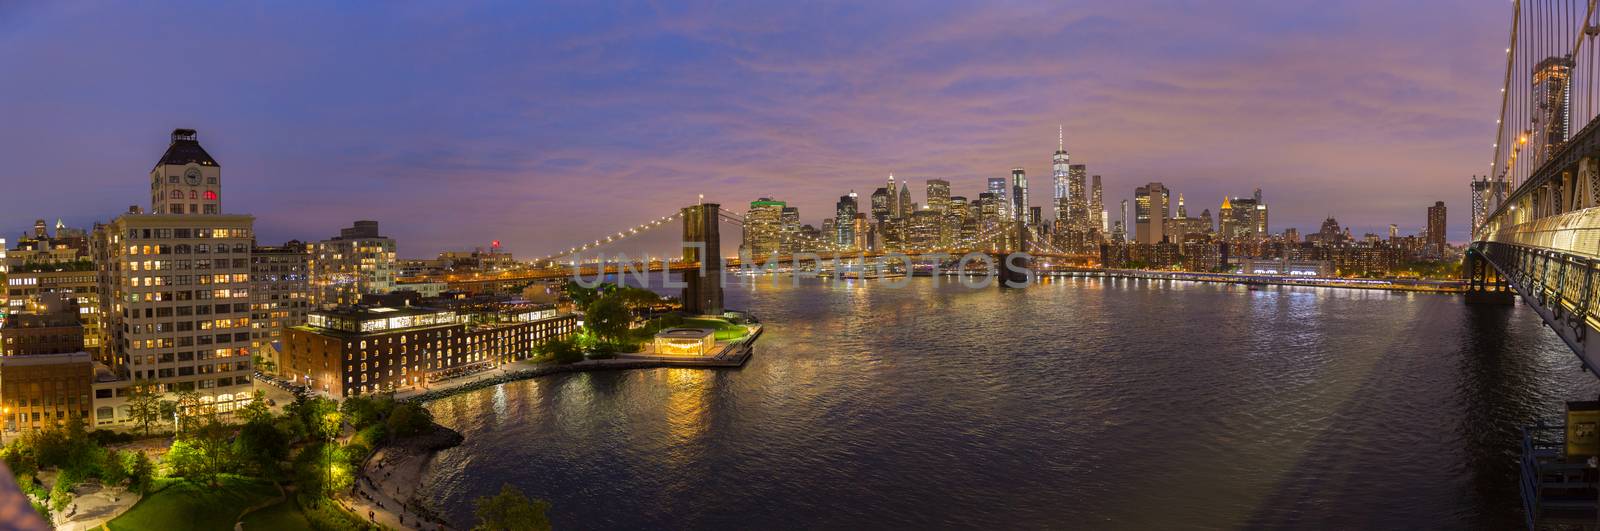 Brooklyn Bridge and Lower Manhattan skyline at night, New York city, USA. by kasto